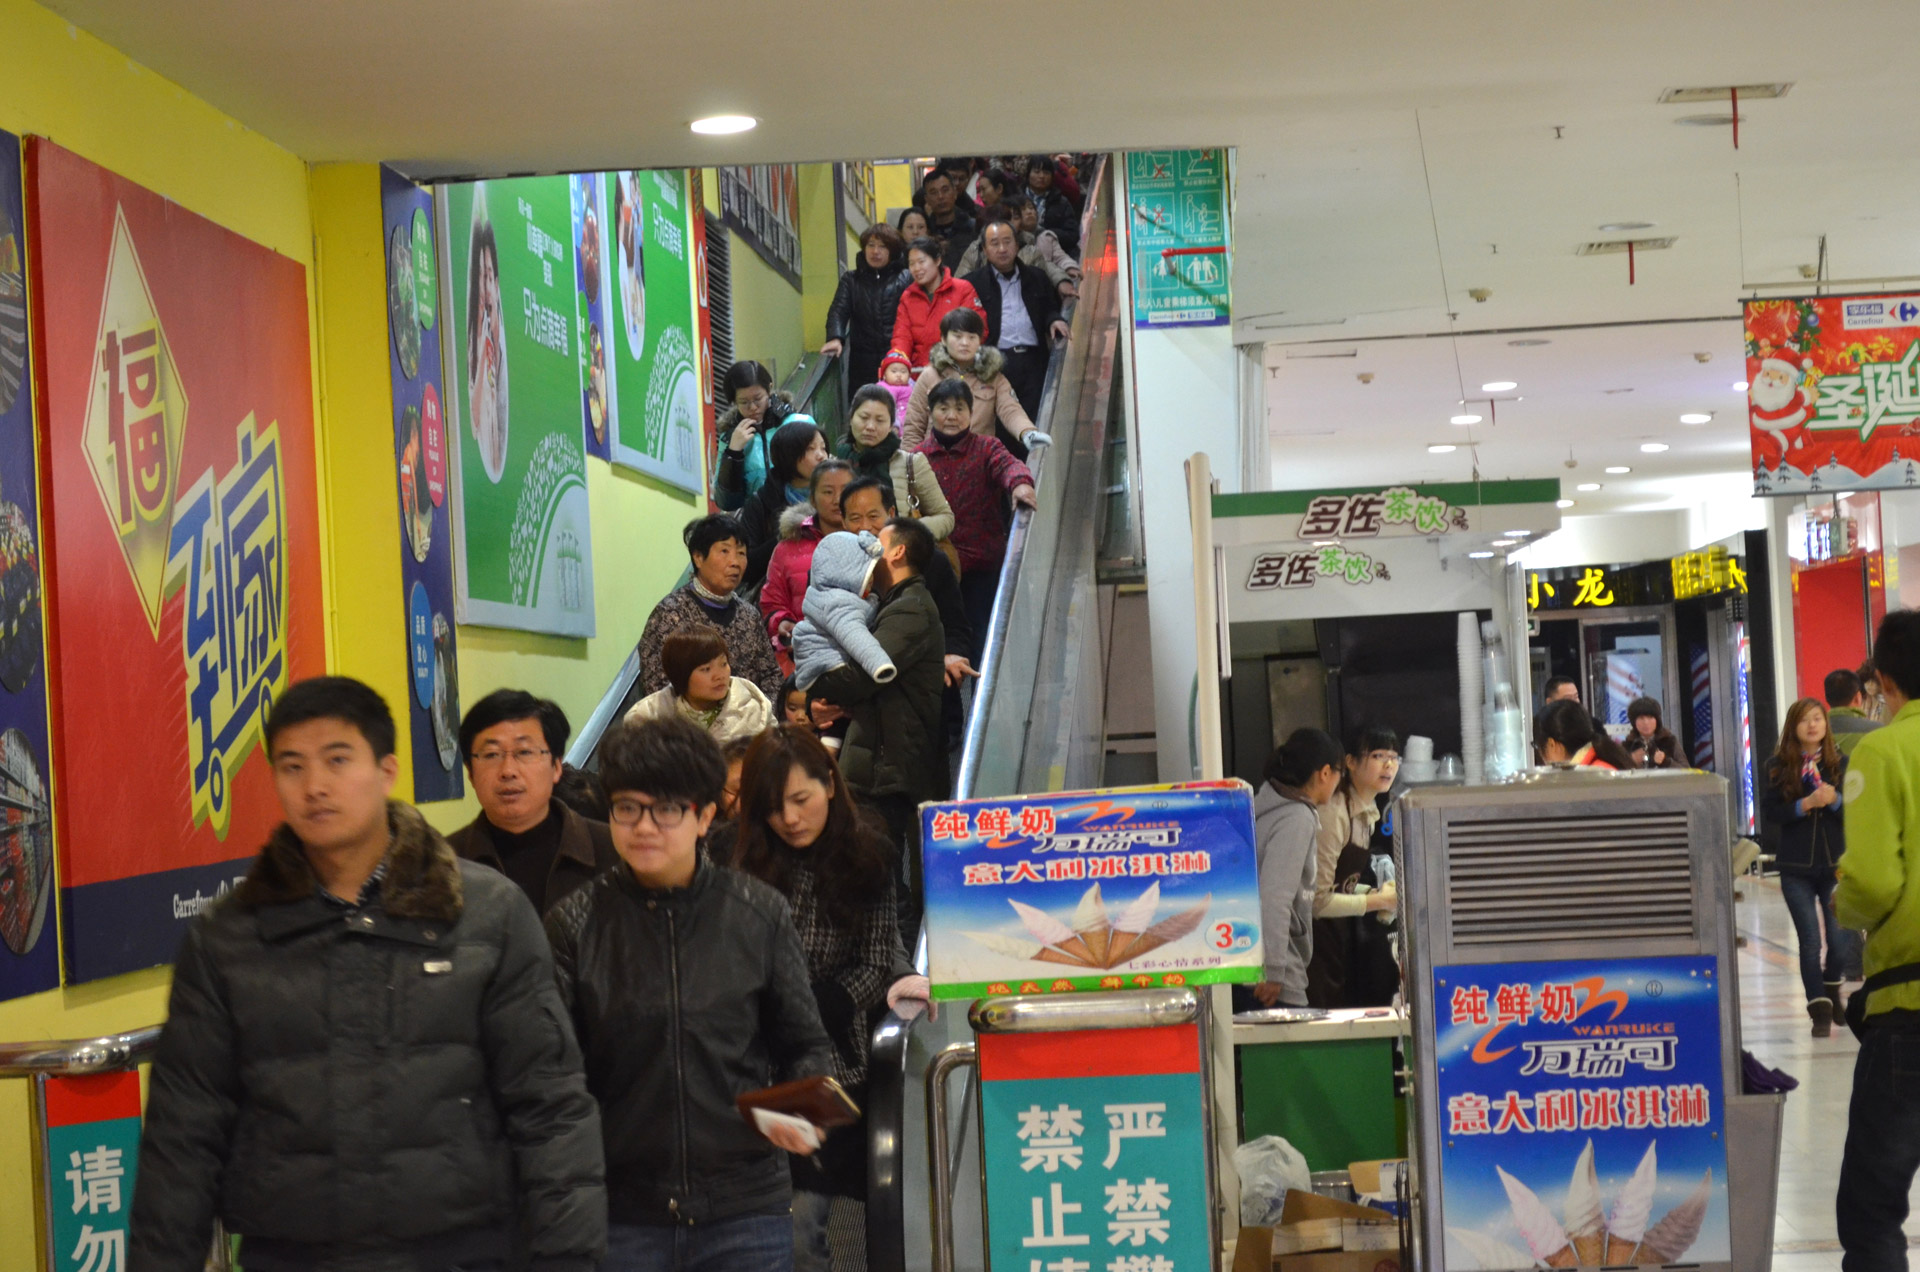 escalator people shop free photo